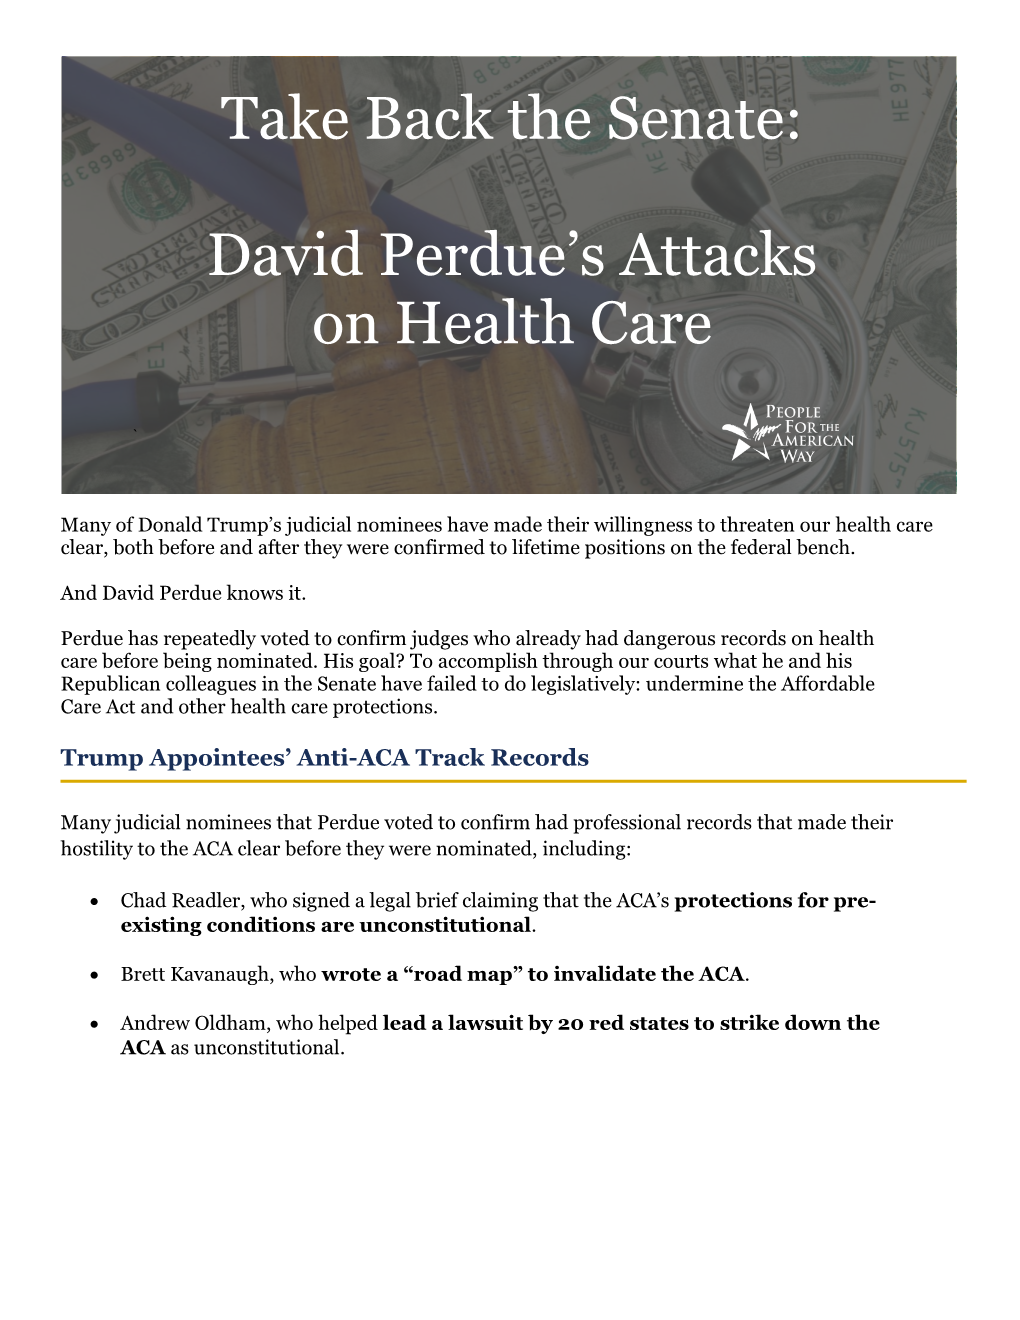 David Perdue's Attacks on Health Care